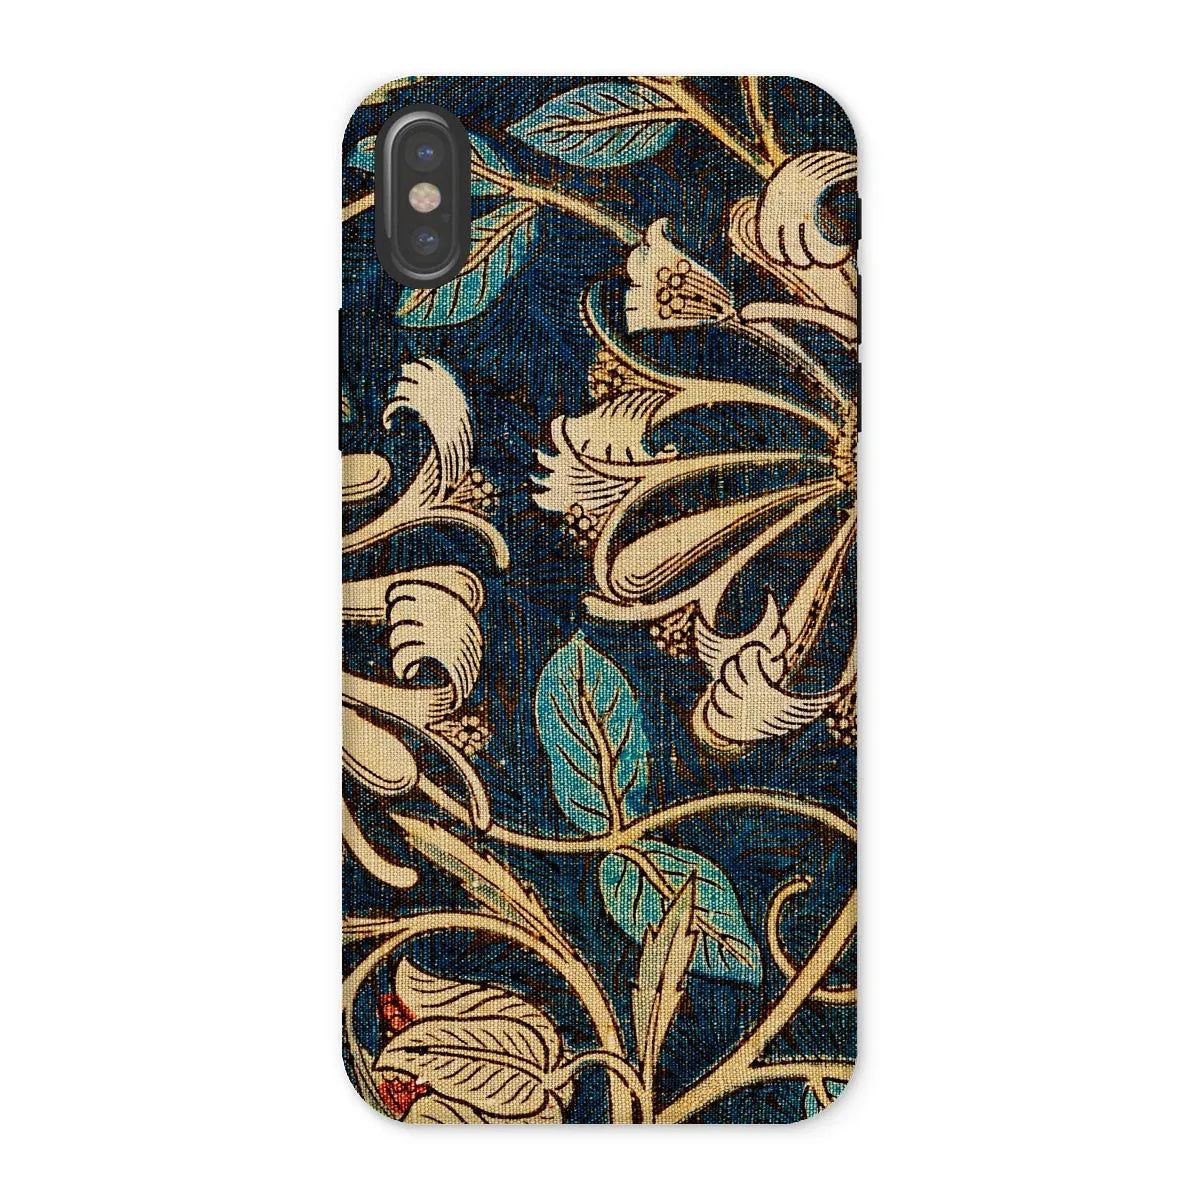 Honeysuckle 3 - Floral Aesthetic Phone Case - William Morris - Iphone x / Matte - Mobile Phone Cases - Aesthetic Art